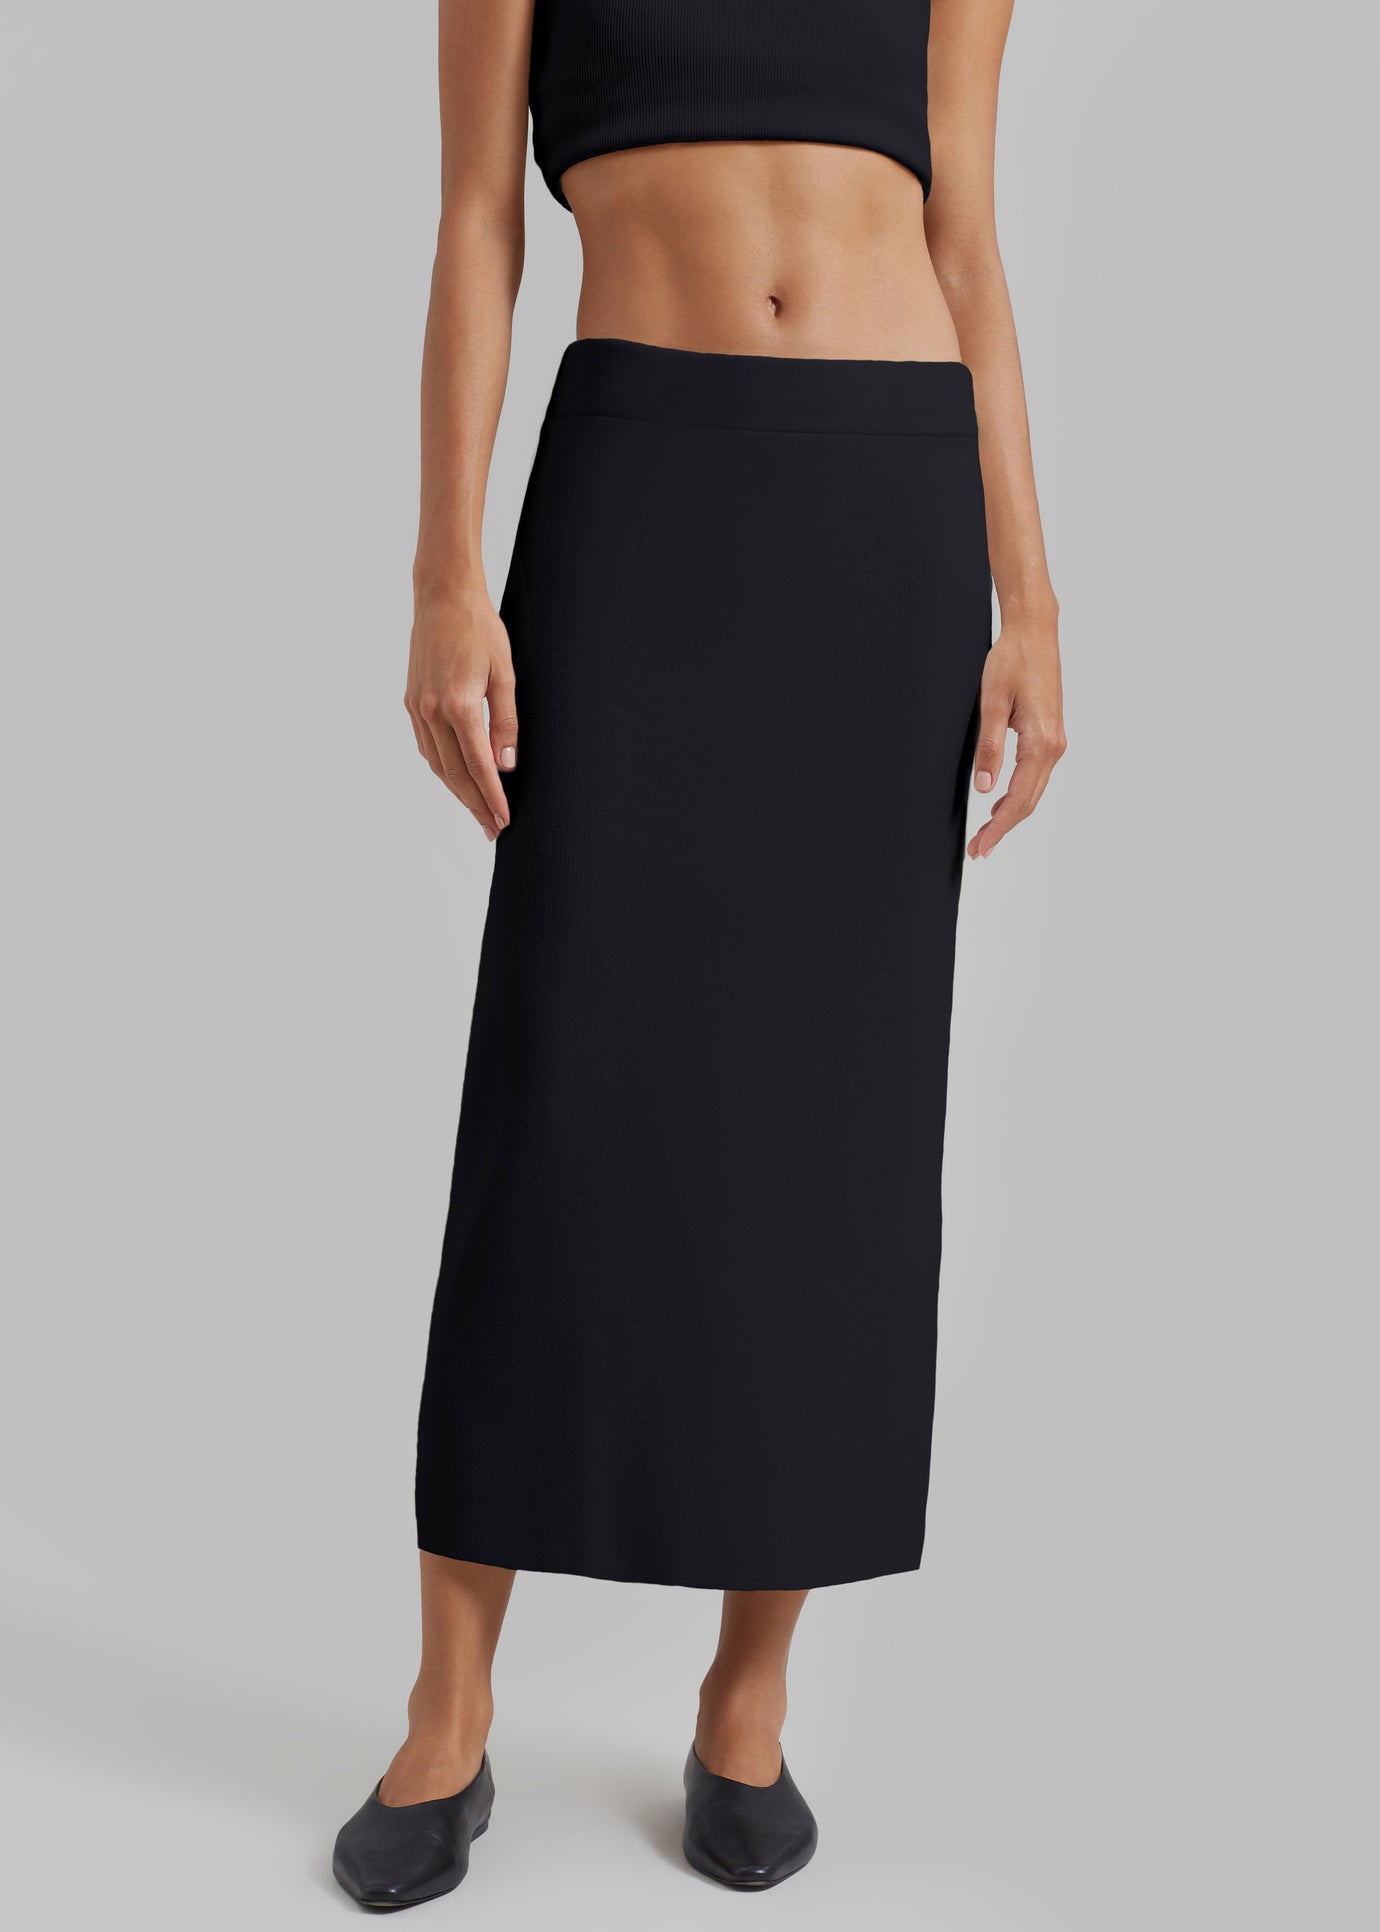 Solange Knit Pencil Skirt - Black - 1